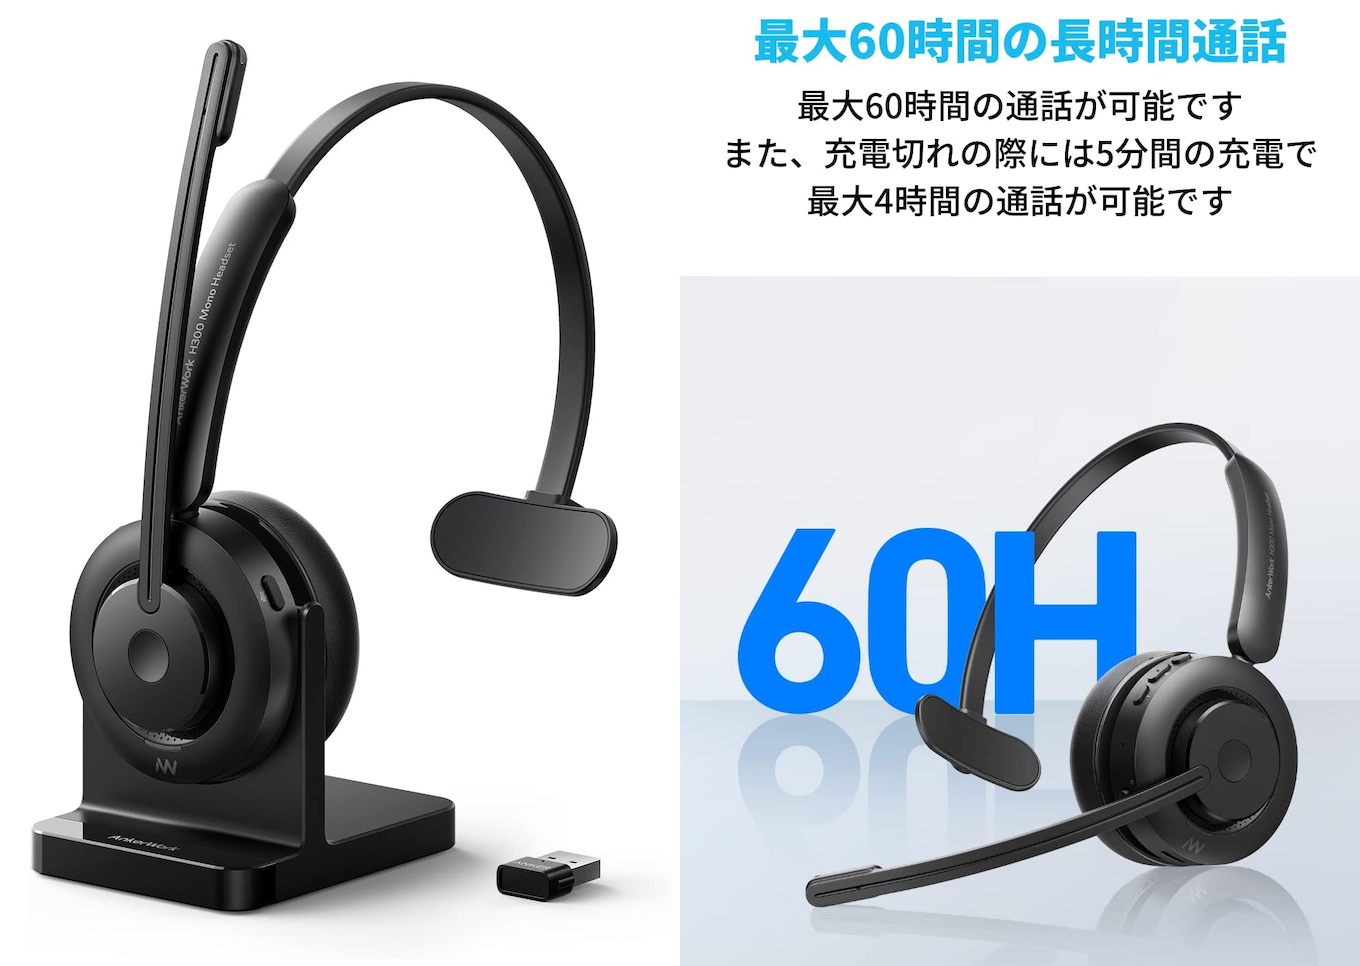 AnkerWork H300 Mono Headsetは最大60時間のワイヤレス通話に対応